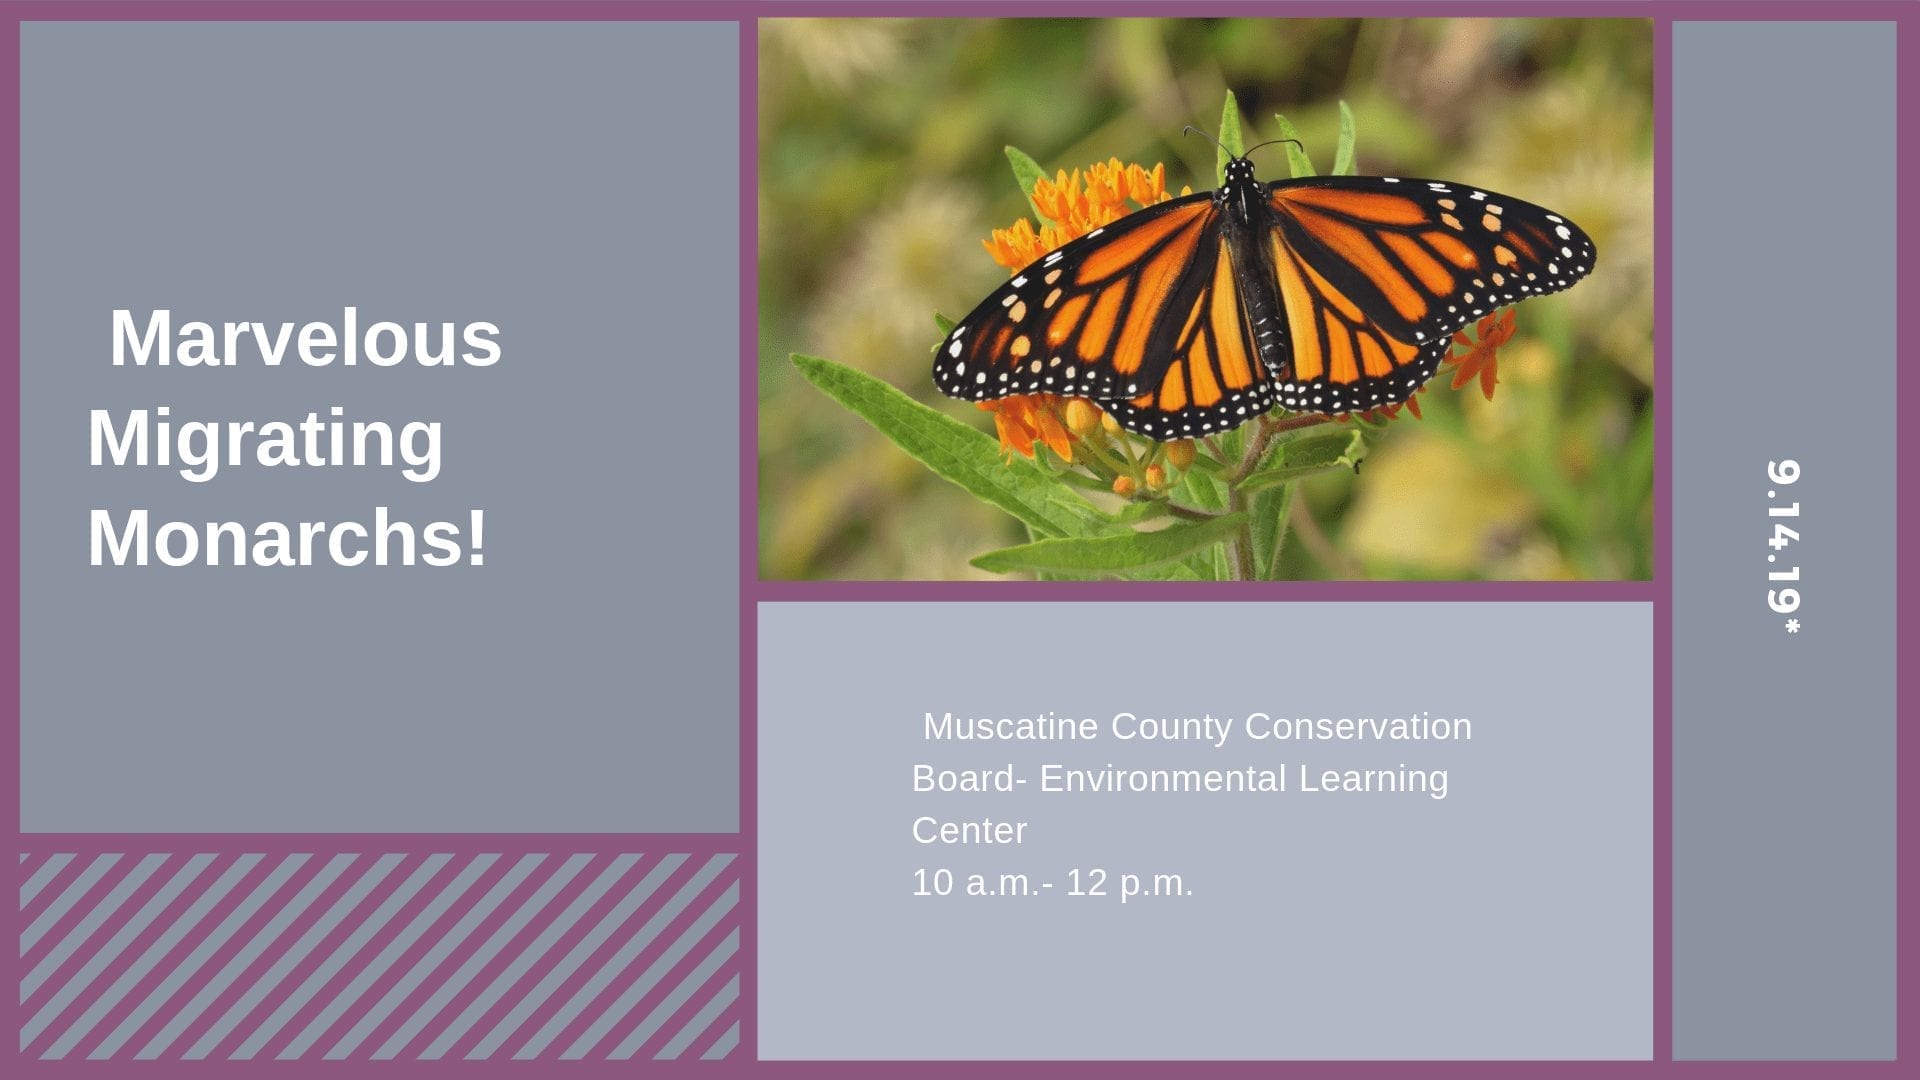 Marvelous Migrating Monarchs!